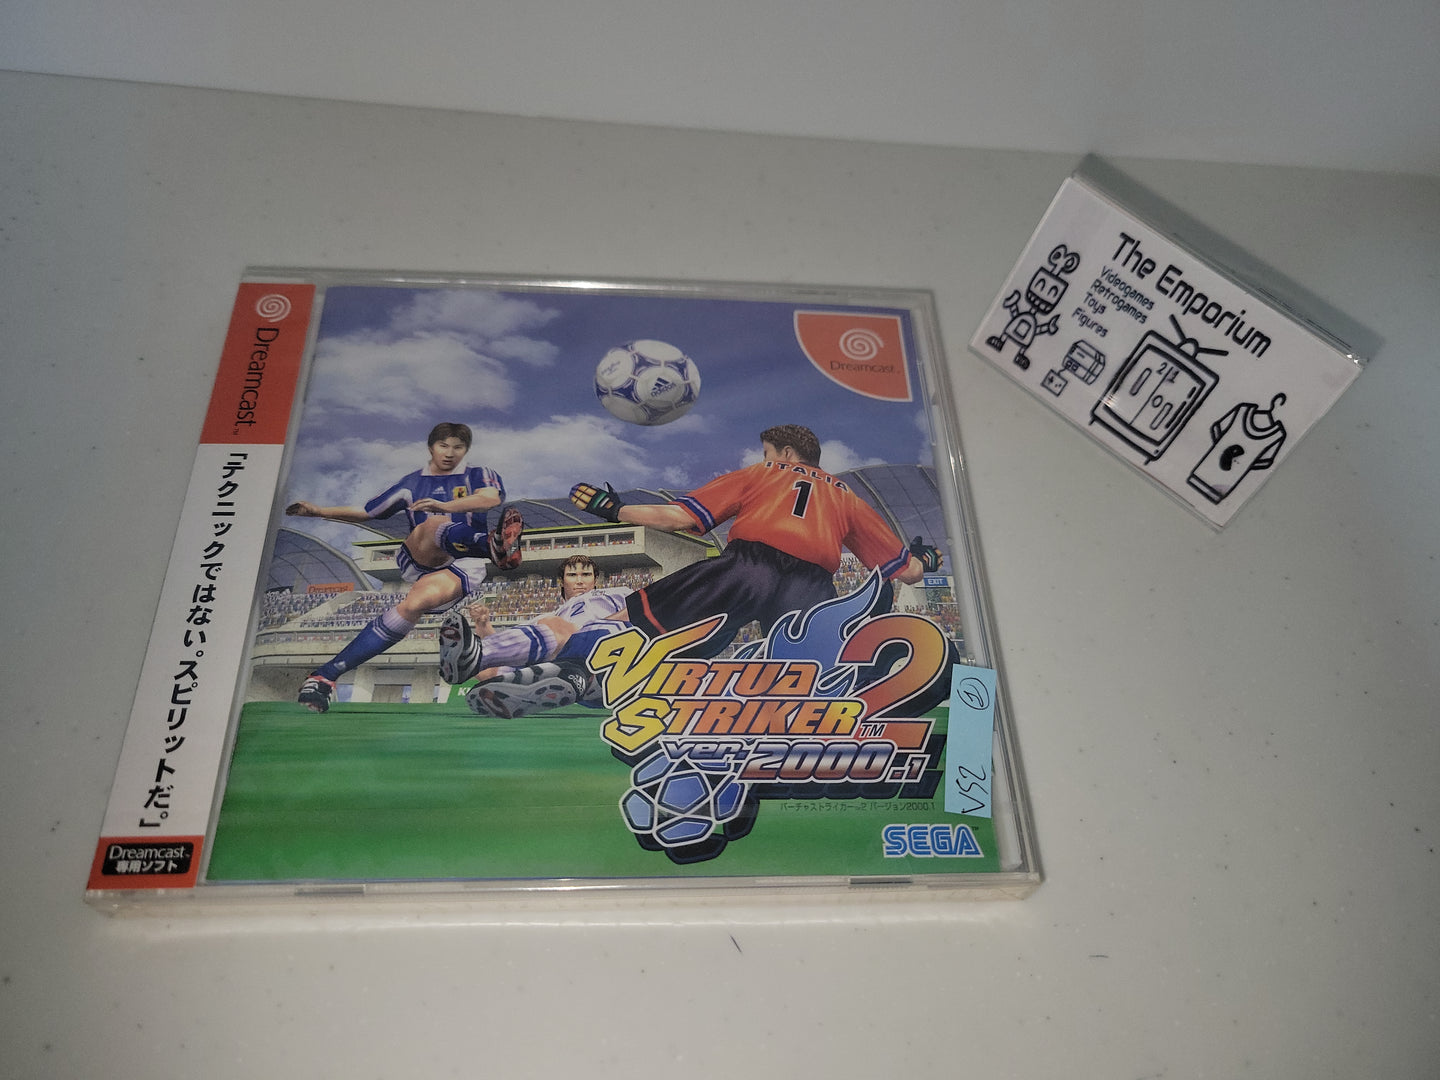 Virtua Striker 2 ver. 2000.1  - Sega dc Dreamcast